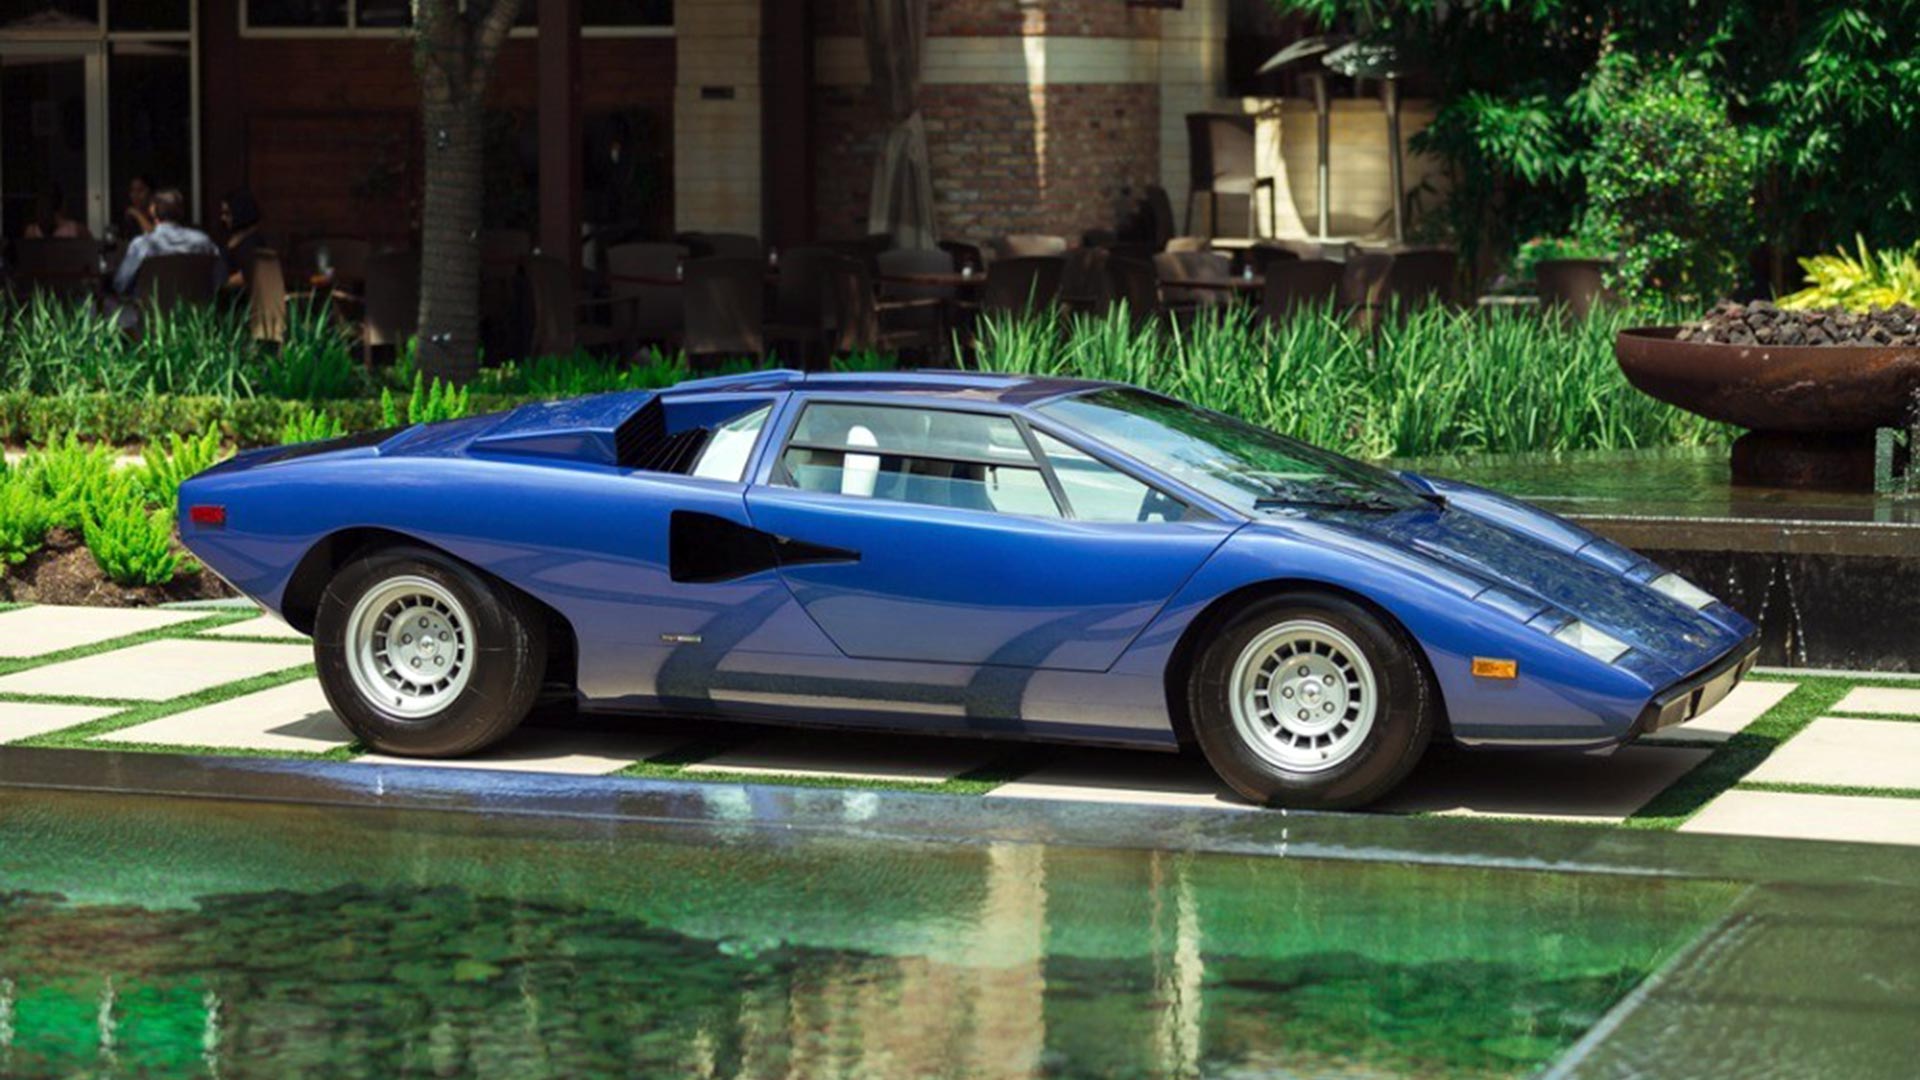 Banish the winter blues with this classic Lamborghini ...